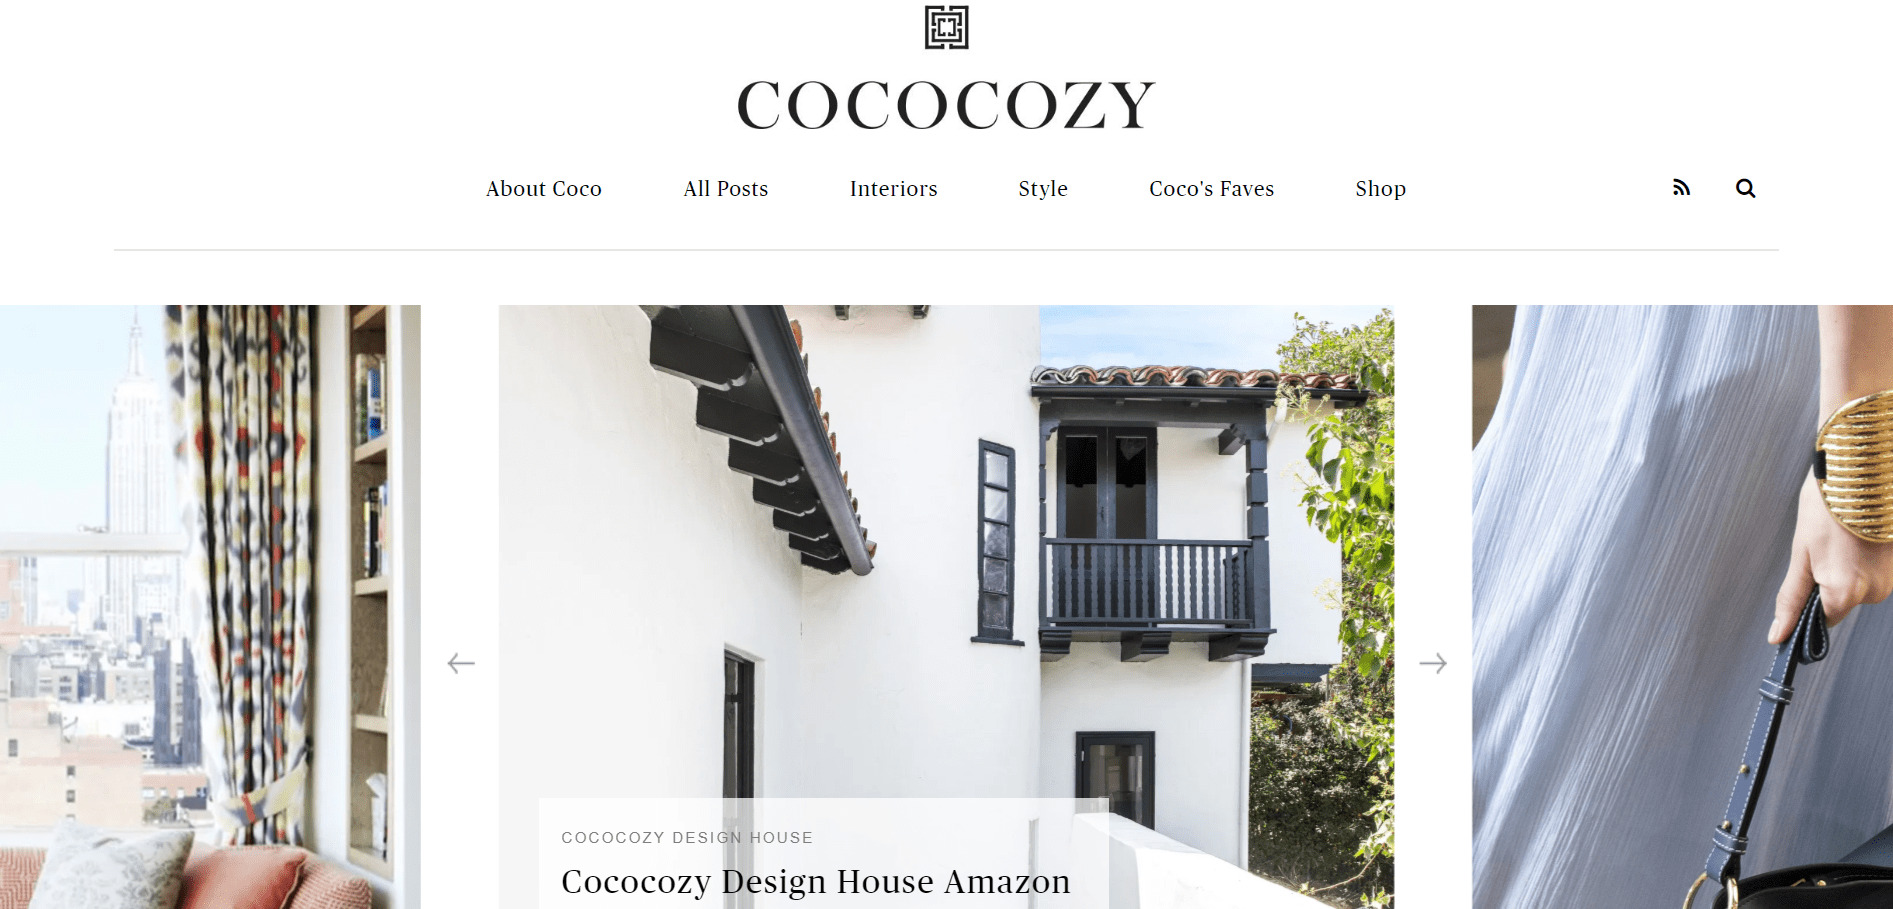 Top 10 Best Interior Design Blogs - Cococozy